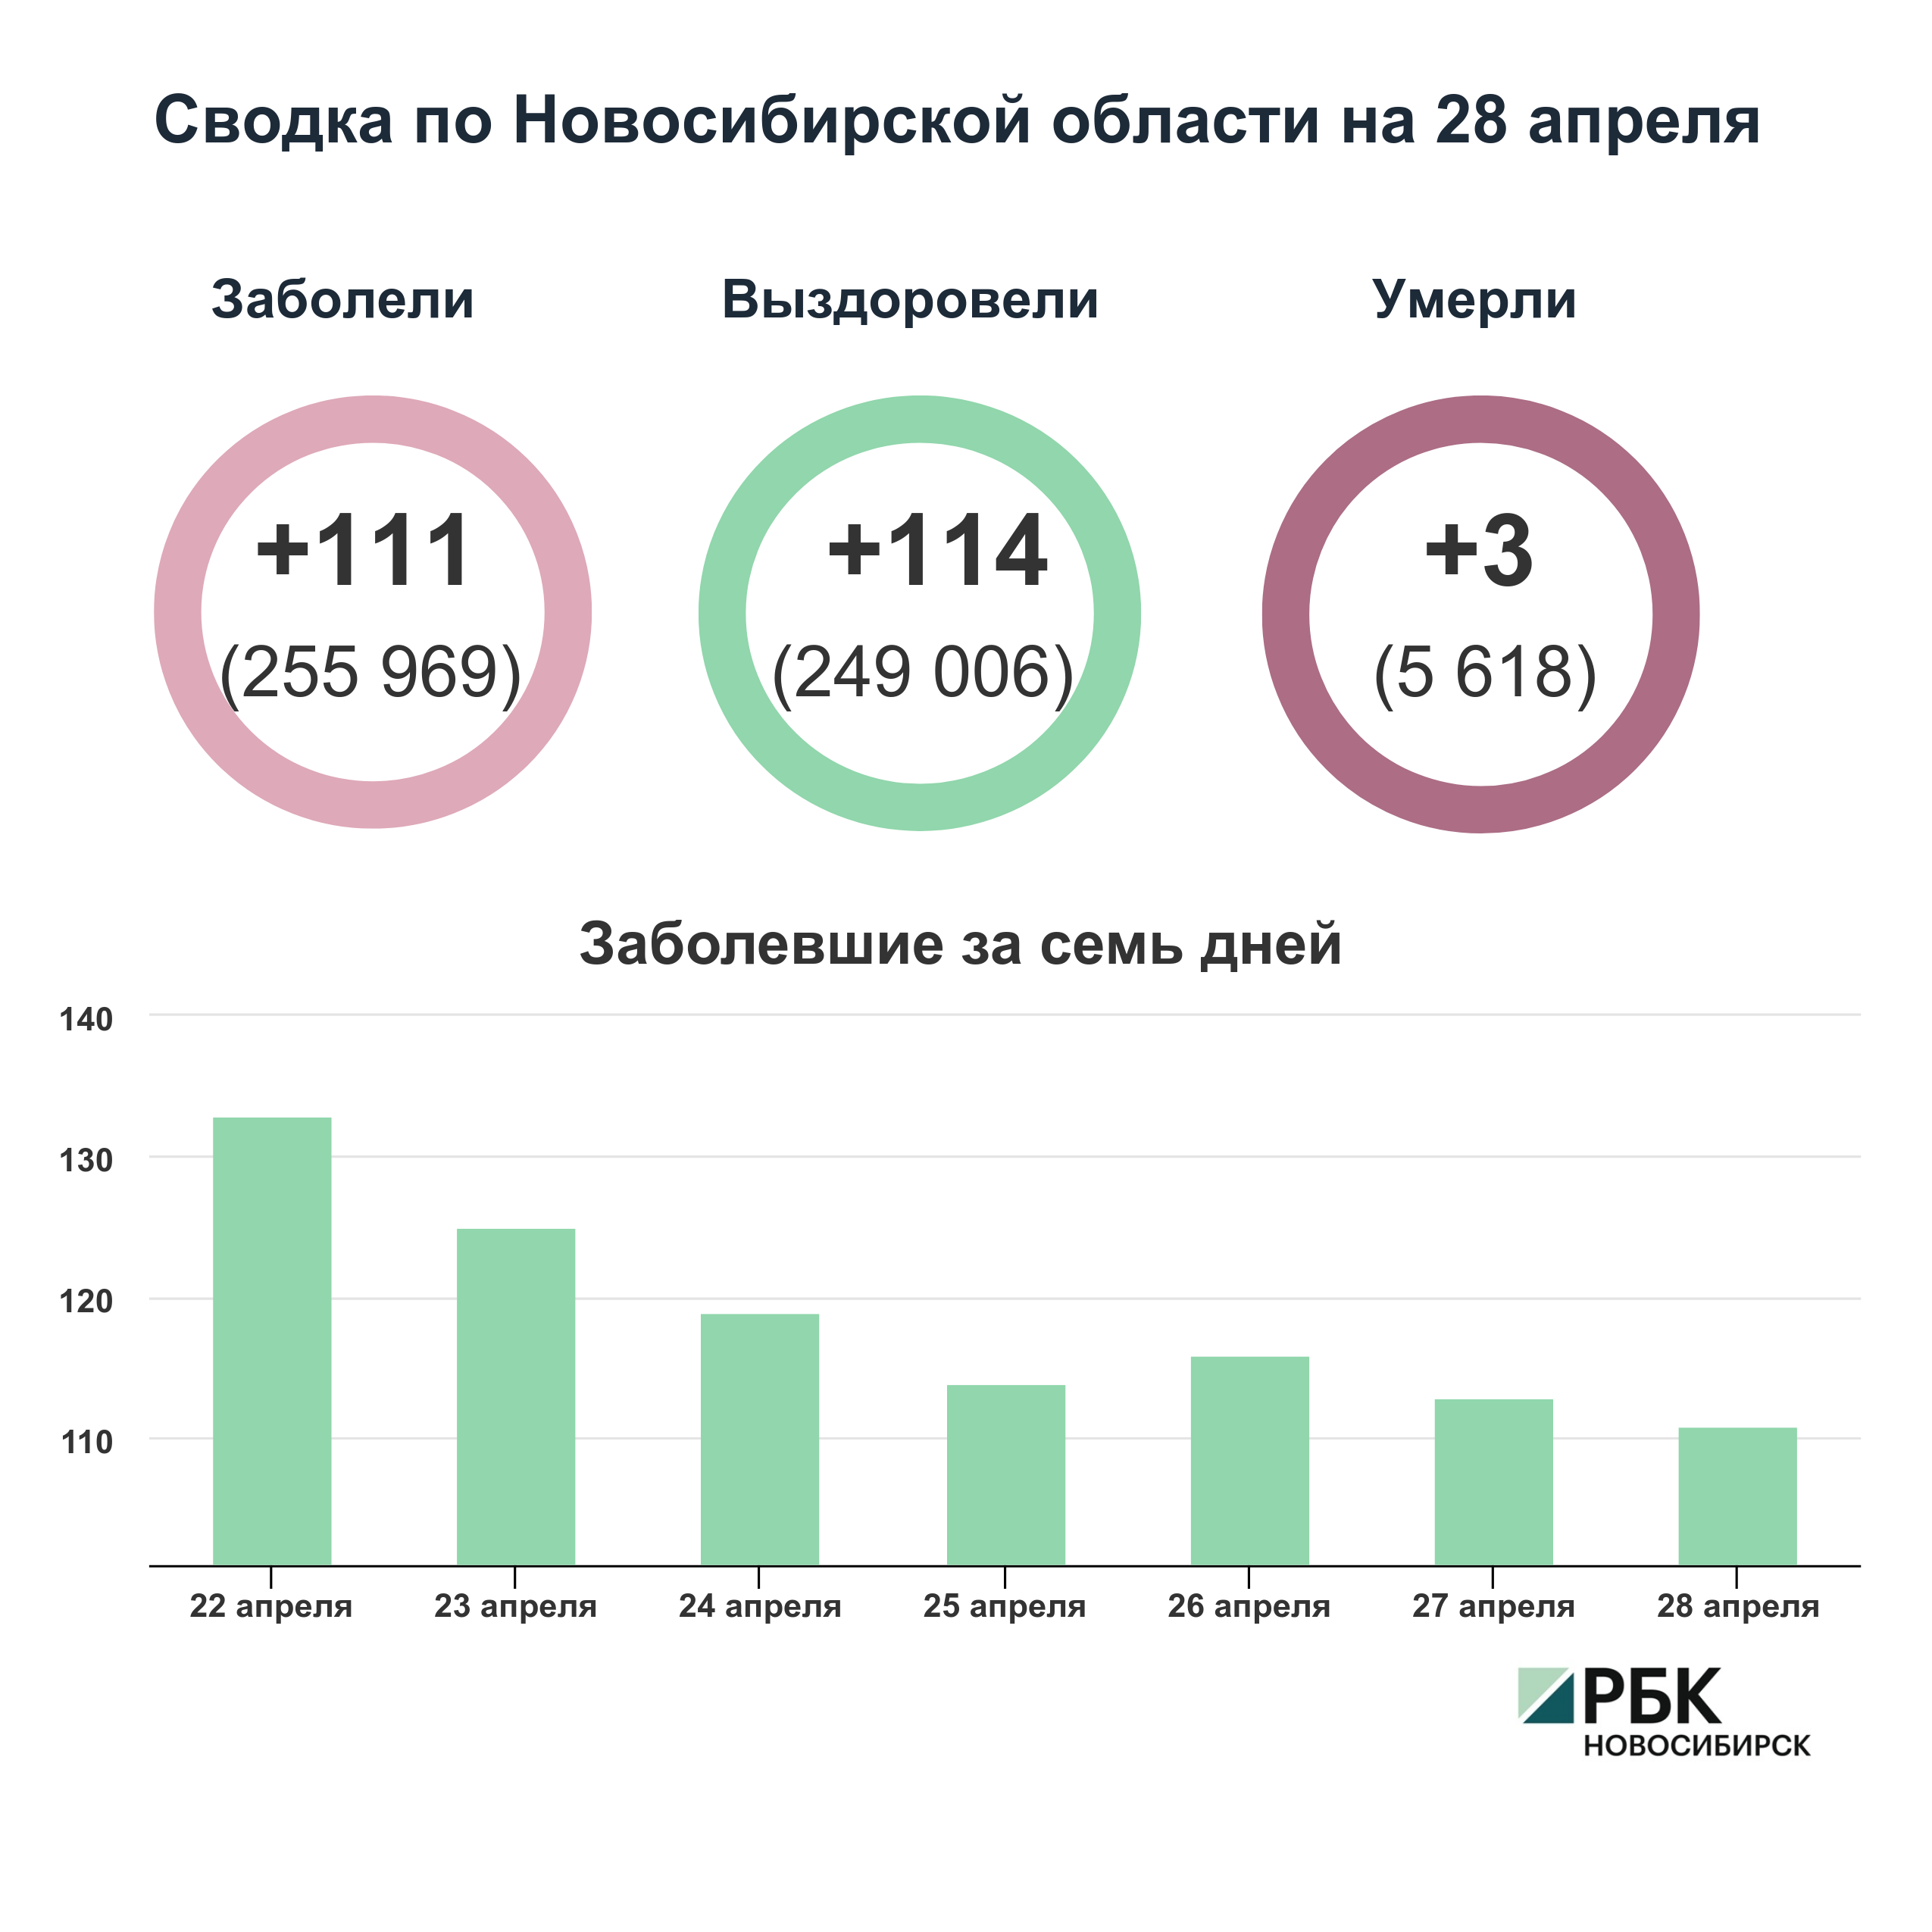 Коронавирус в Новосибирске: сводка на 28 апреля